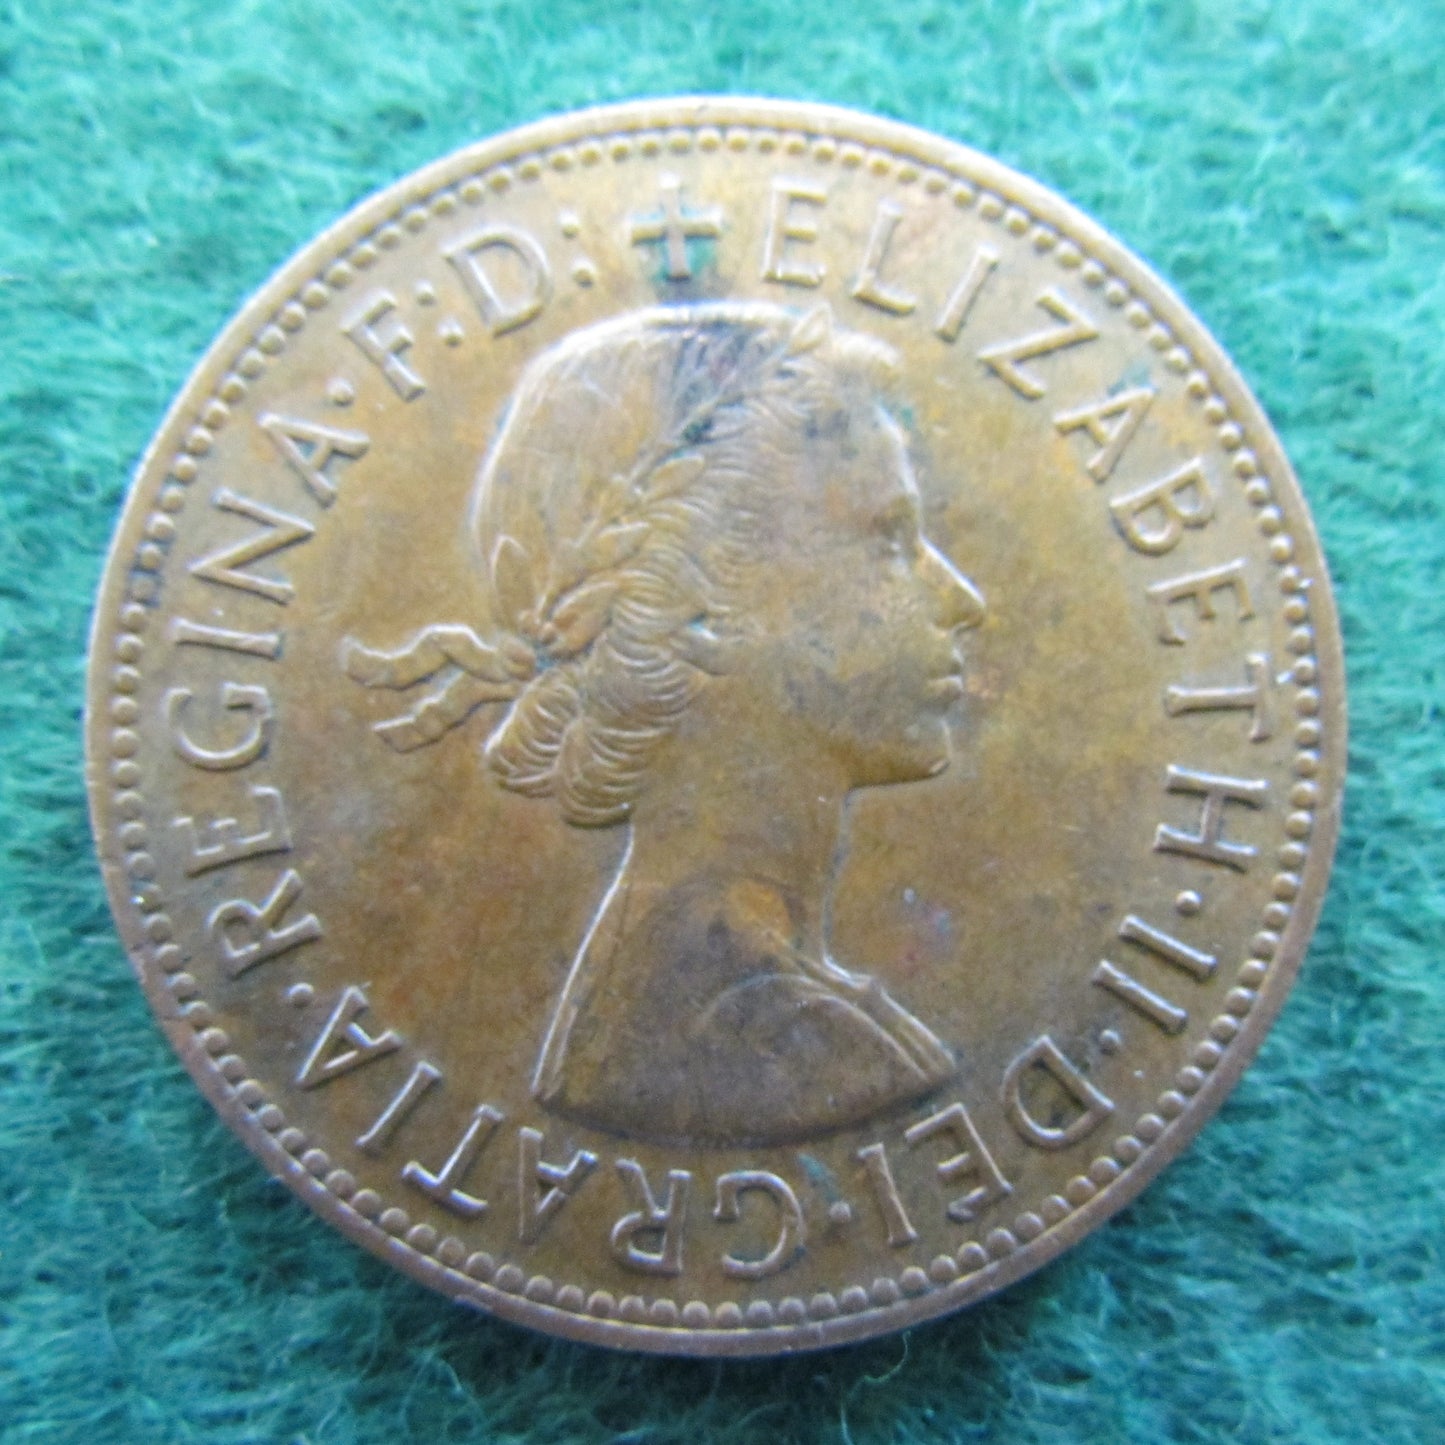 GB British UK English 1967 Penny Queen Elizabeth II Coin